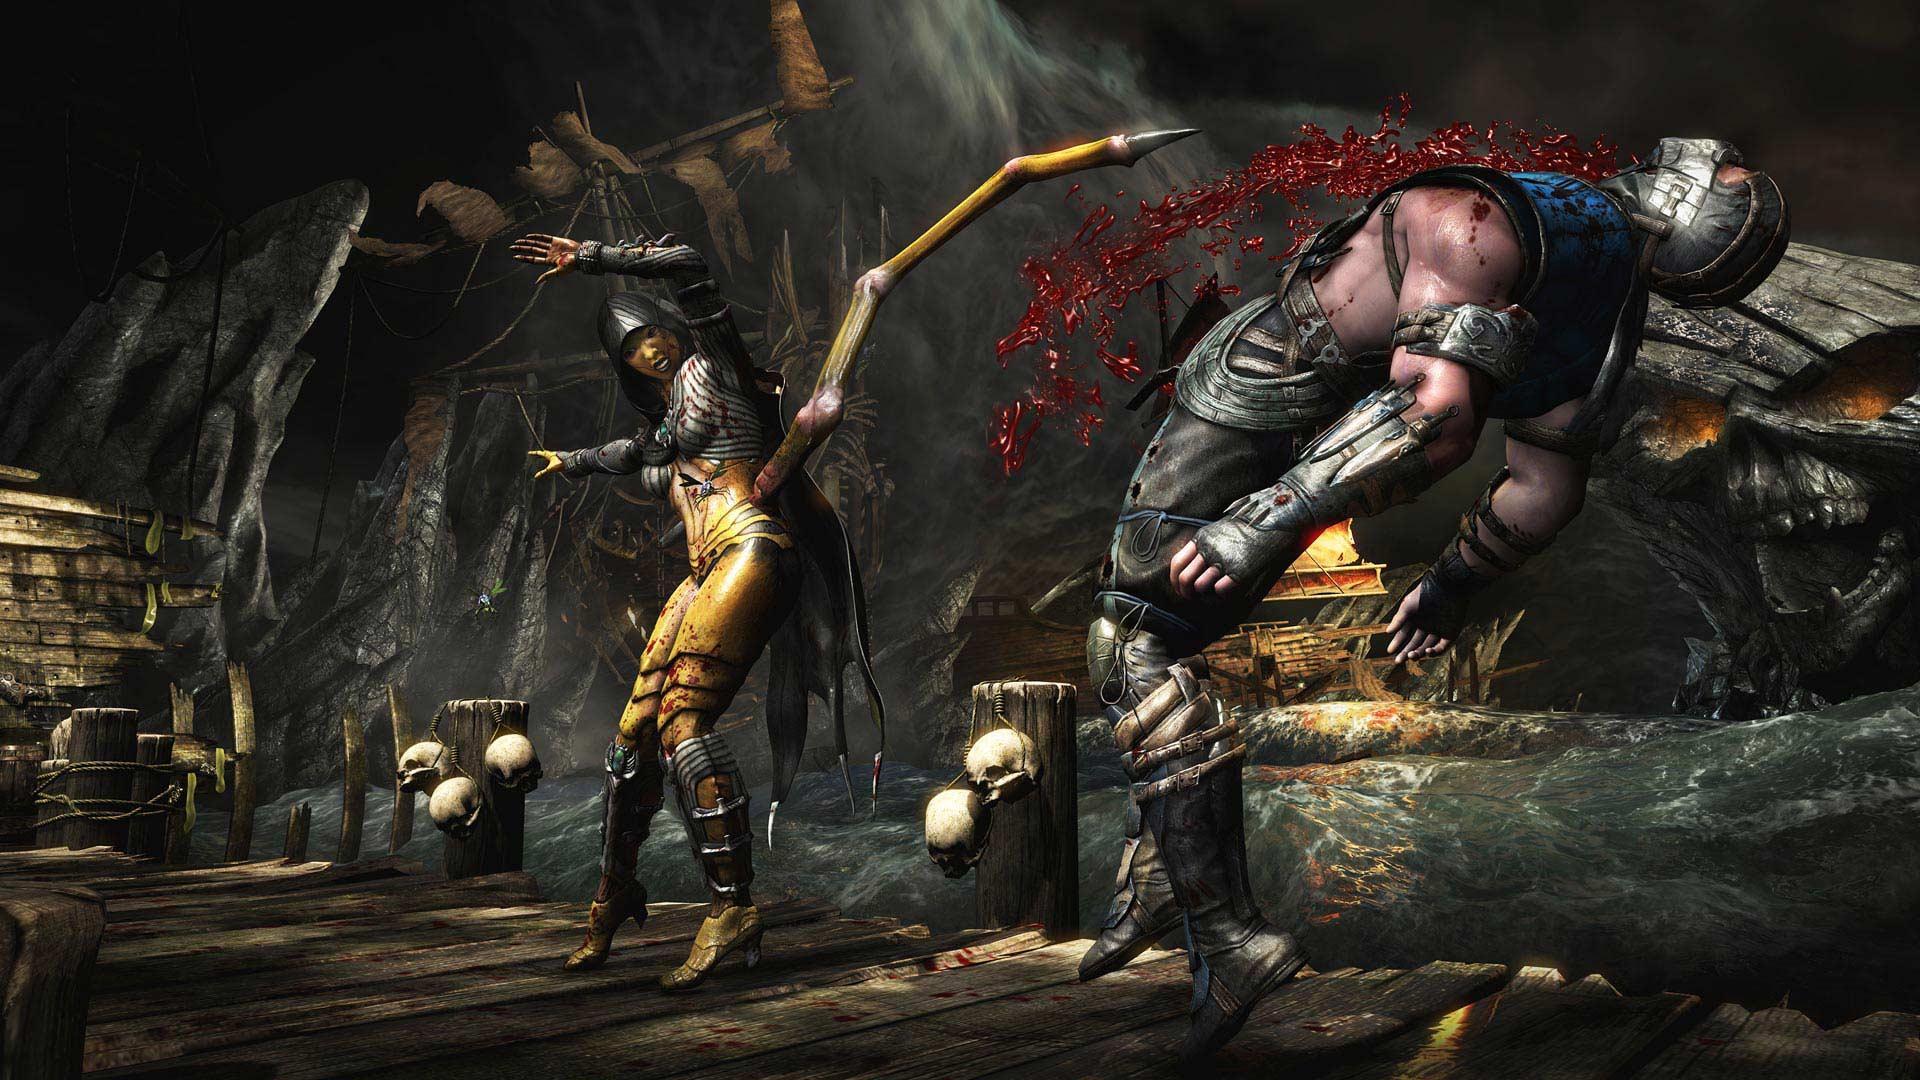 Fighters Mortal Kombat X Mkx For Android Apk Download - mortal kombat mk x roblox